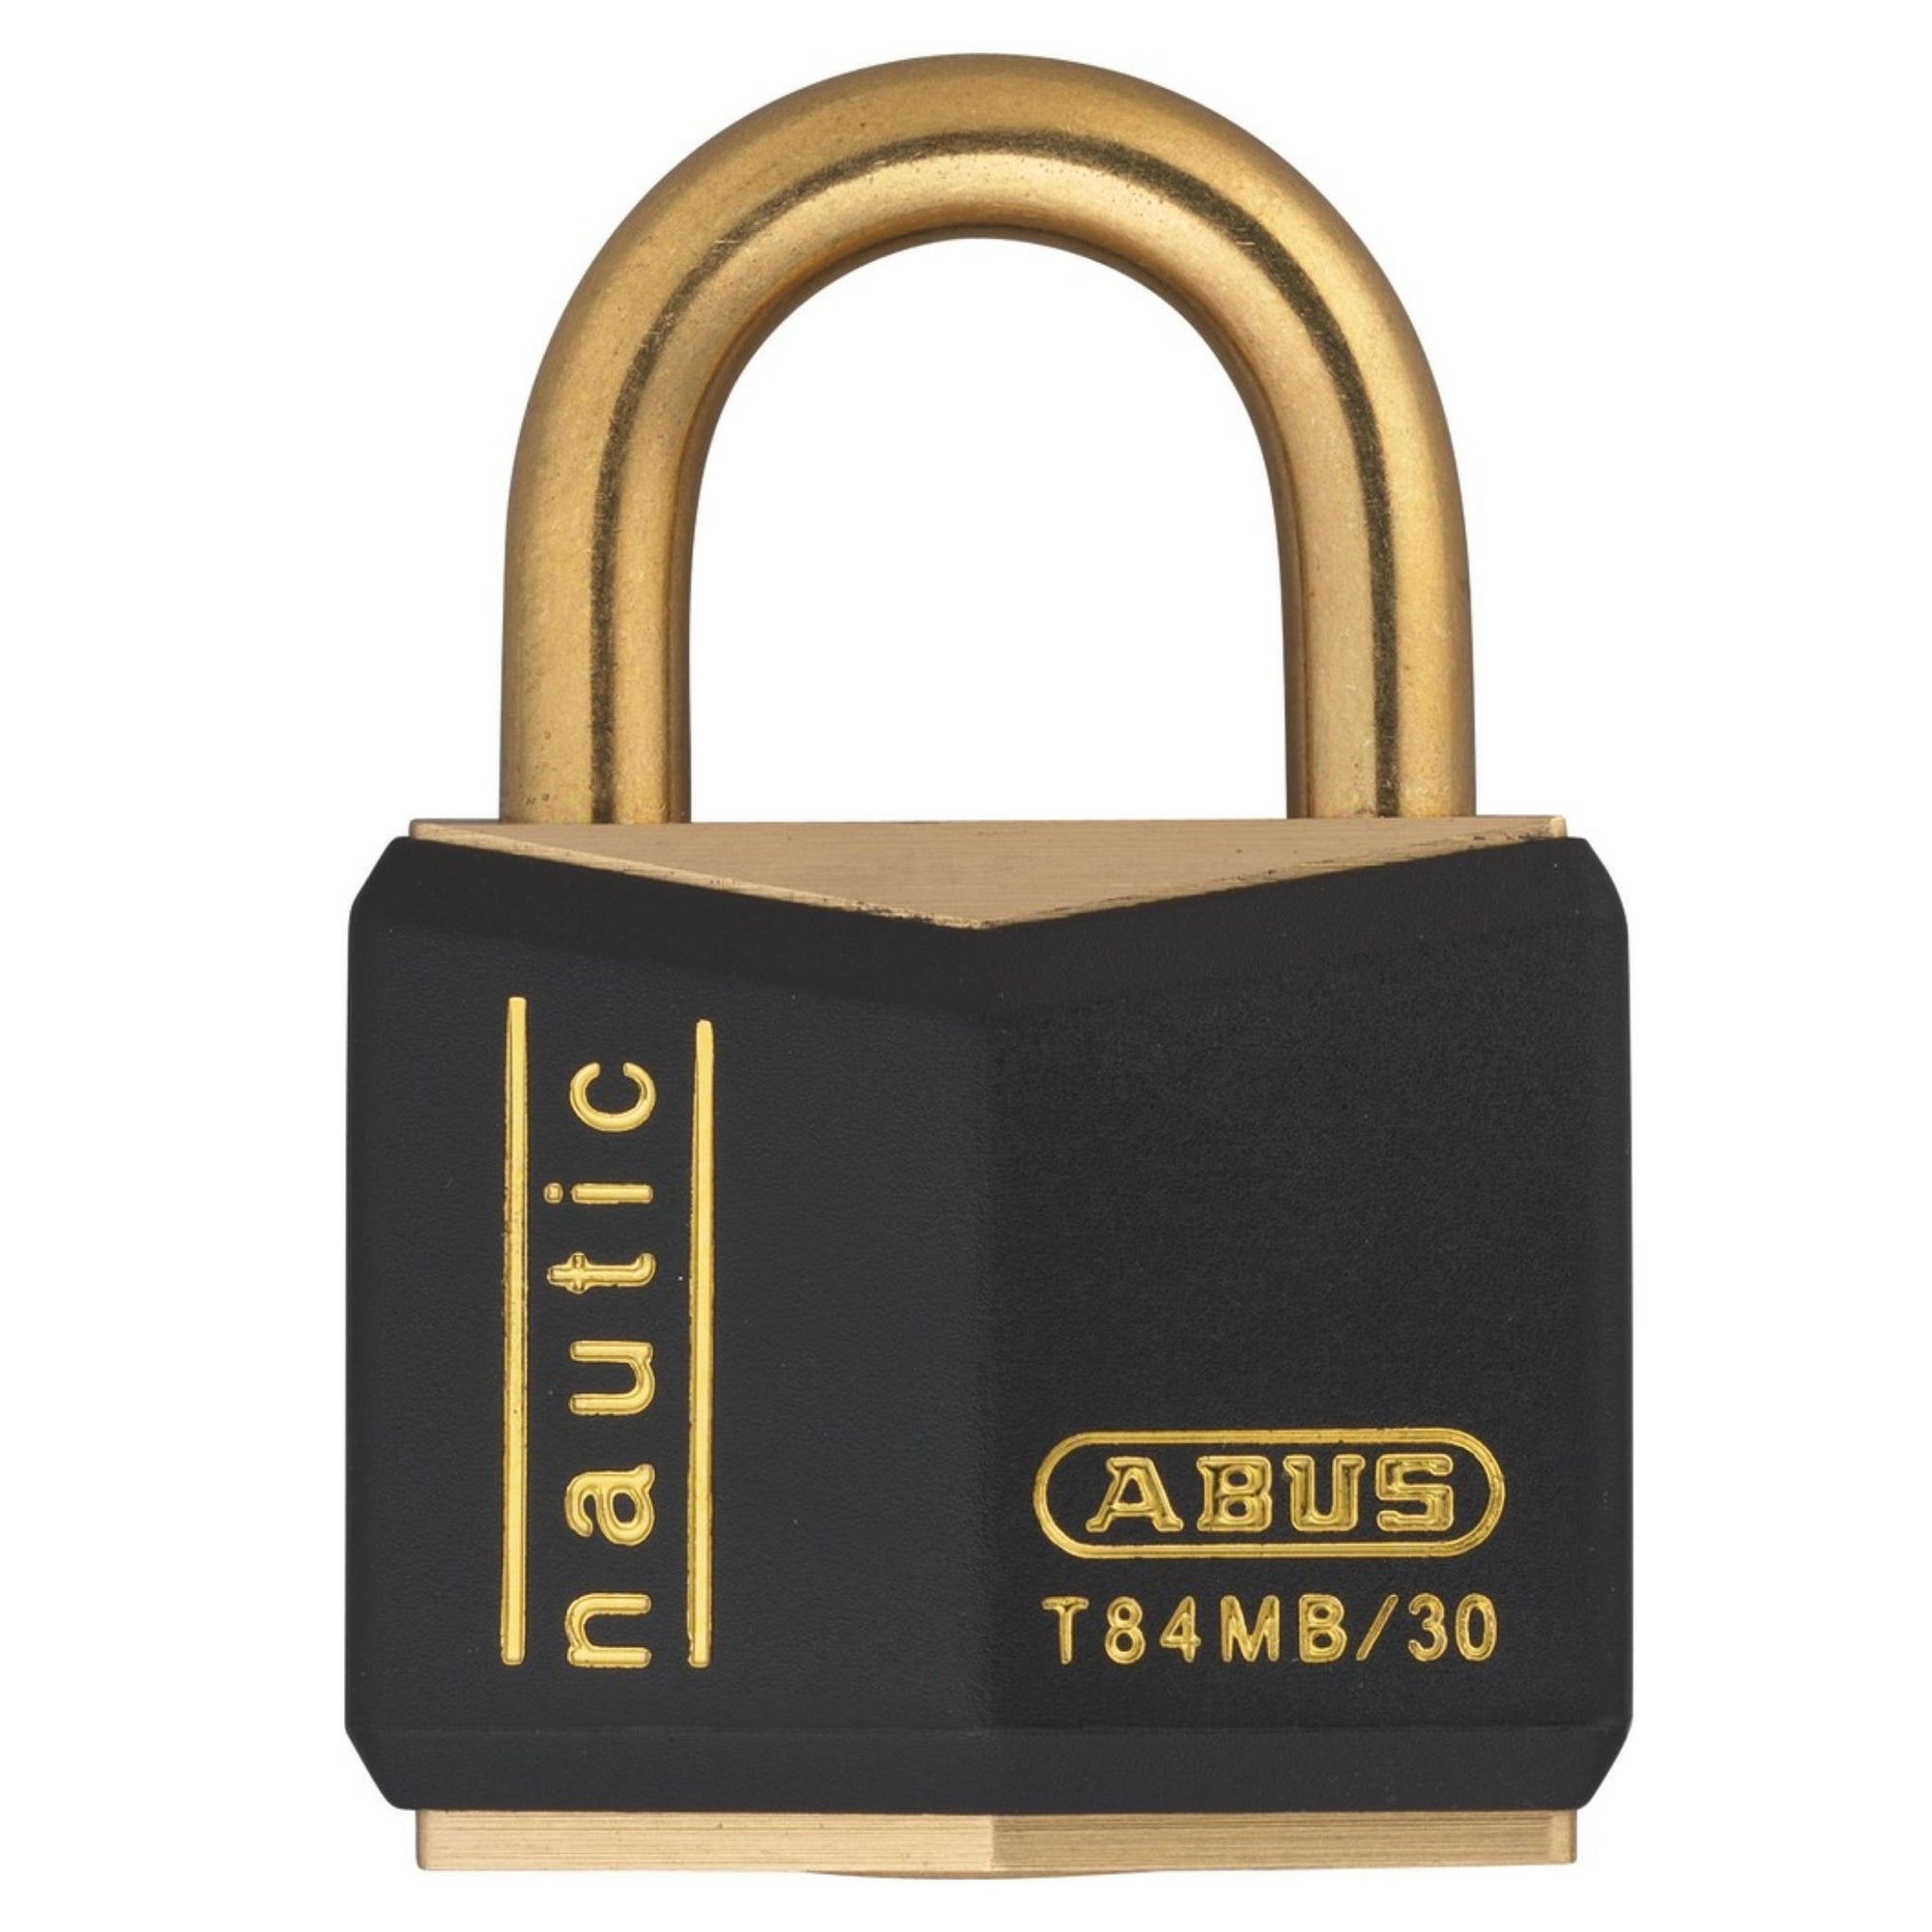 Abus T84MB/30 Locks All Weather Brass Padlocks - The Lock Source